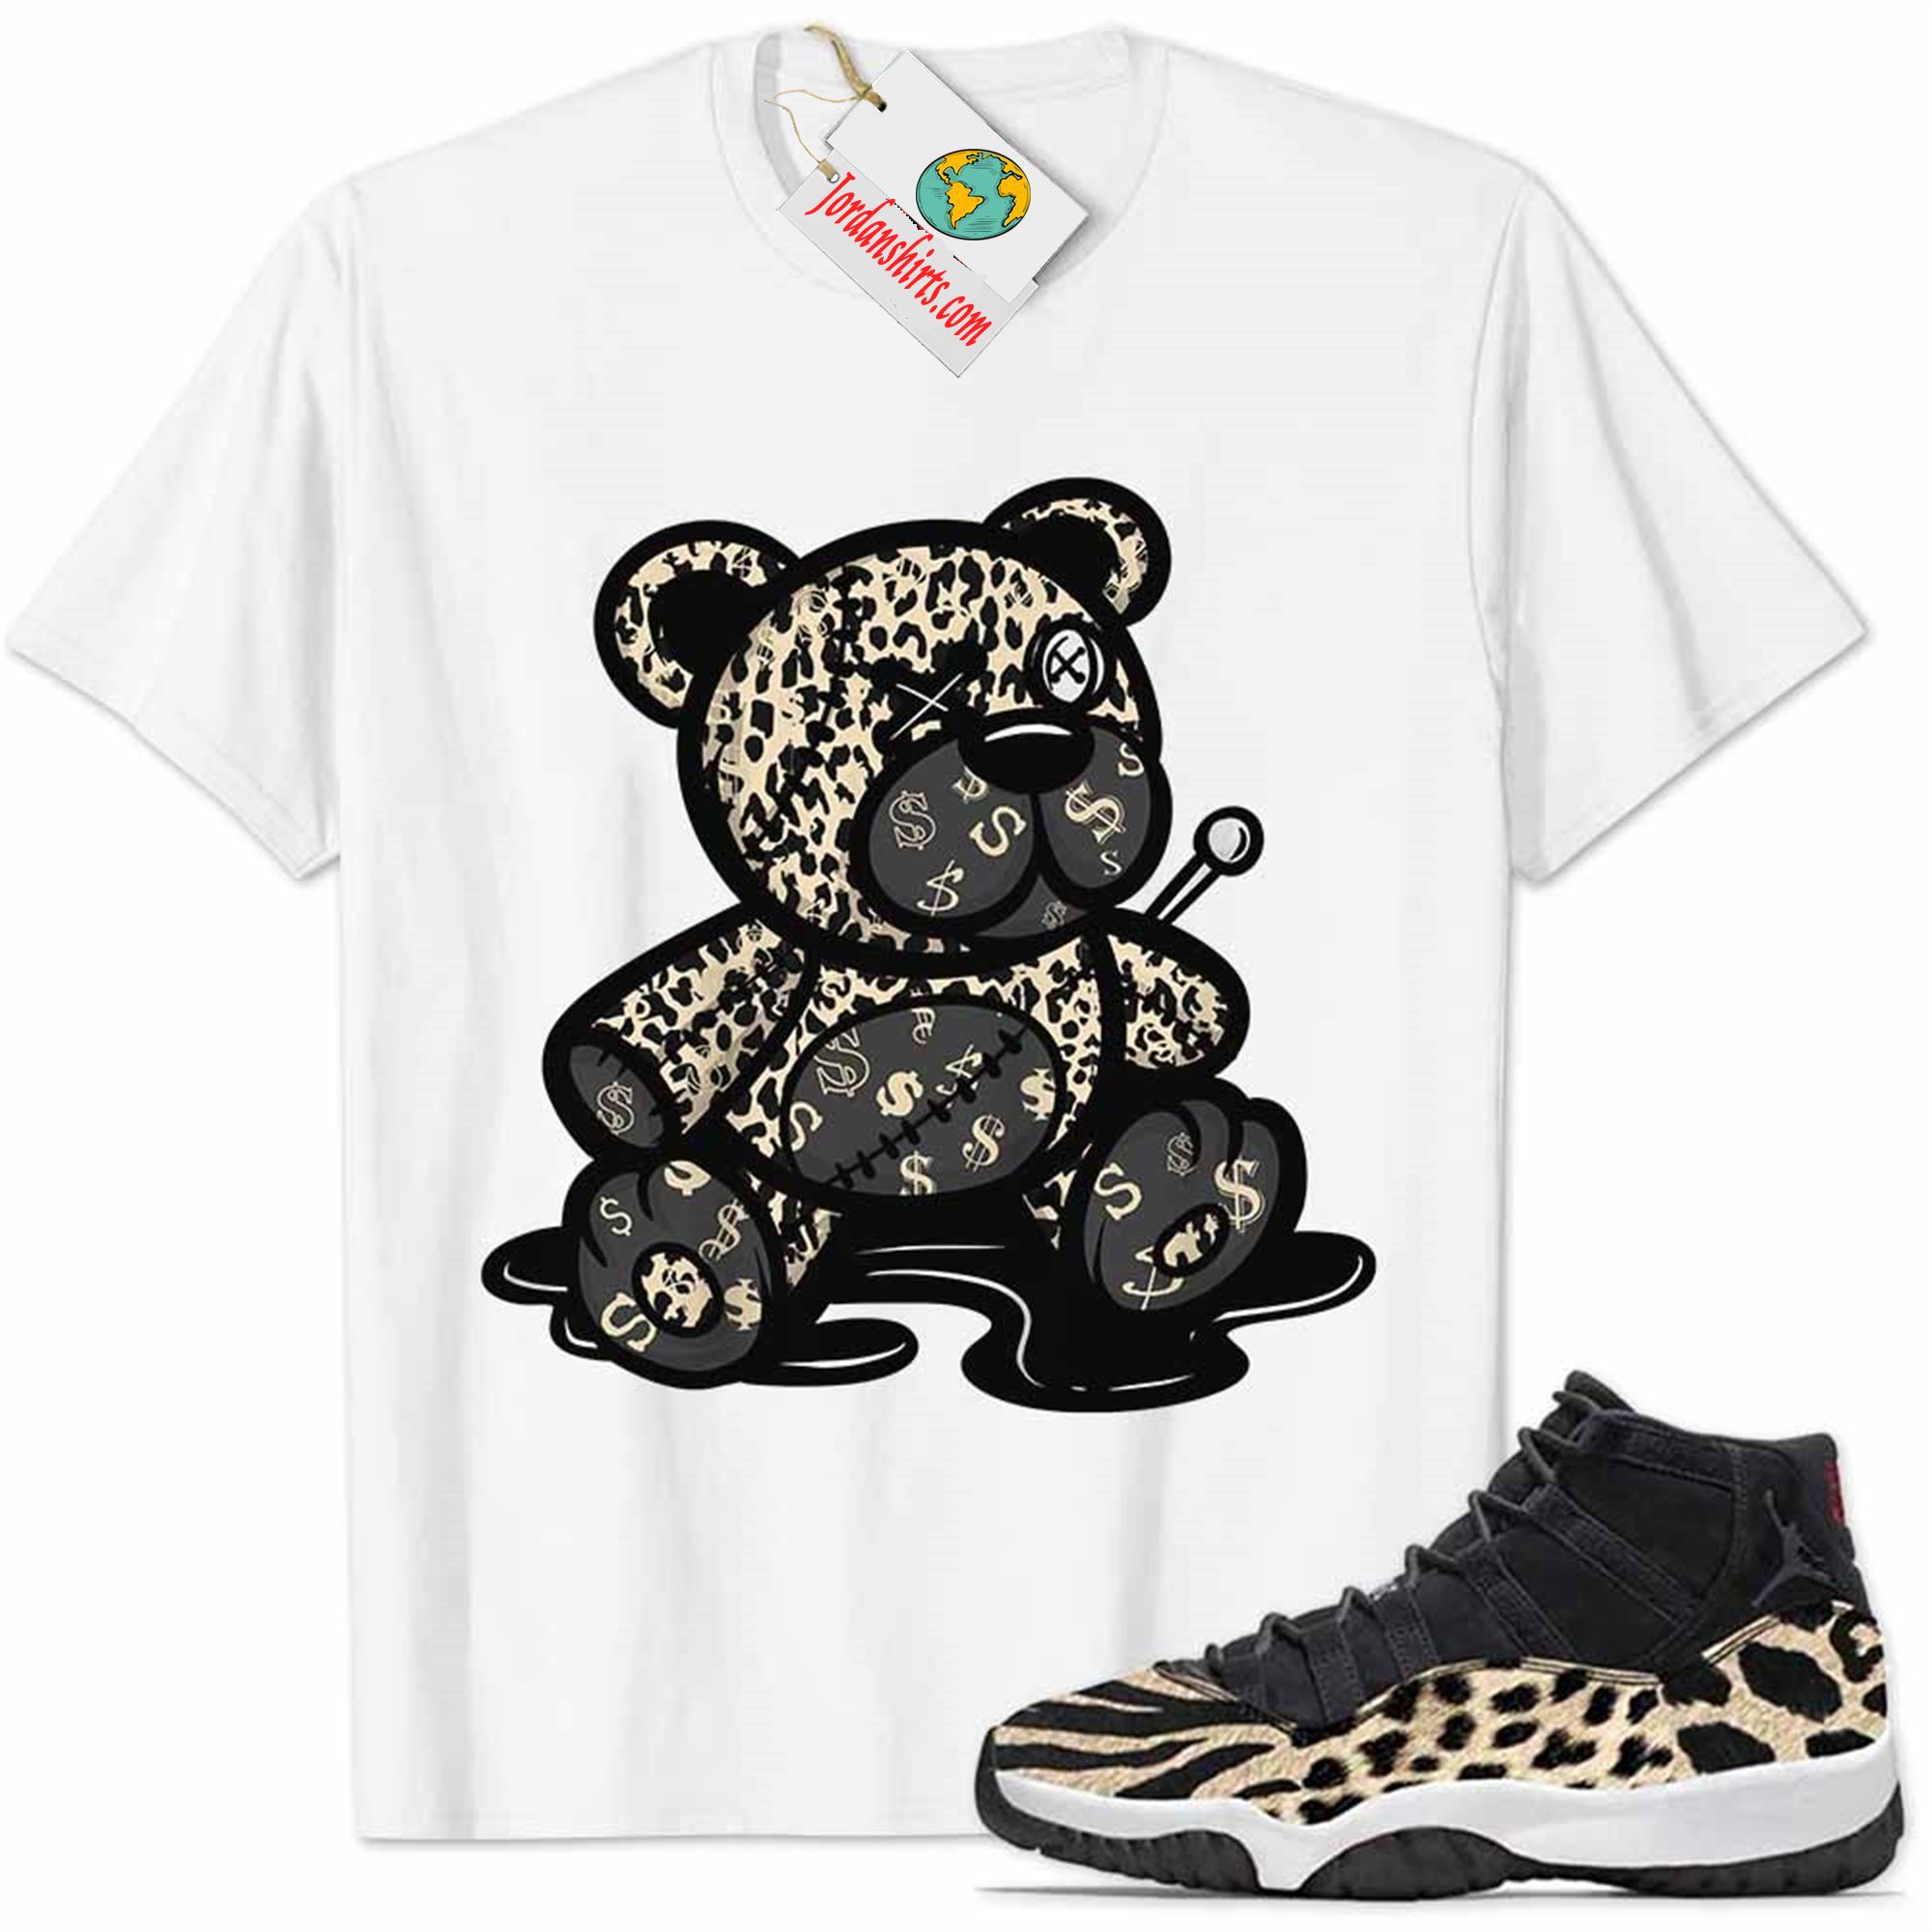 Jordan 11 Shirt, Jordan 11 Animal Print Shirt Teddy Bear All Money In White Full Size Up To 5xl